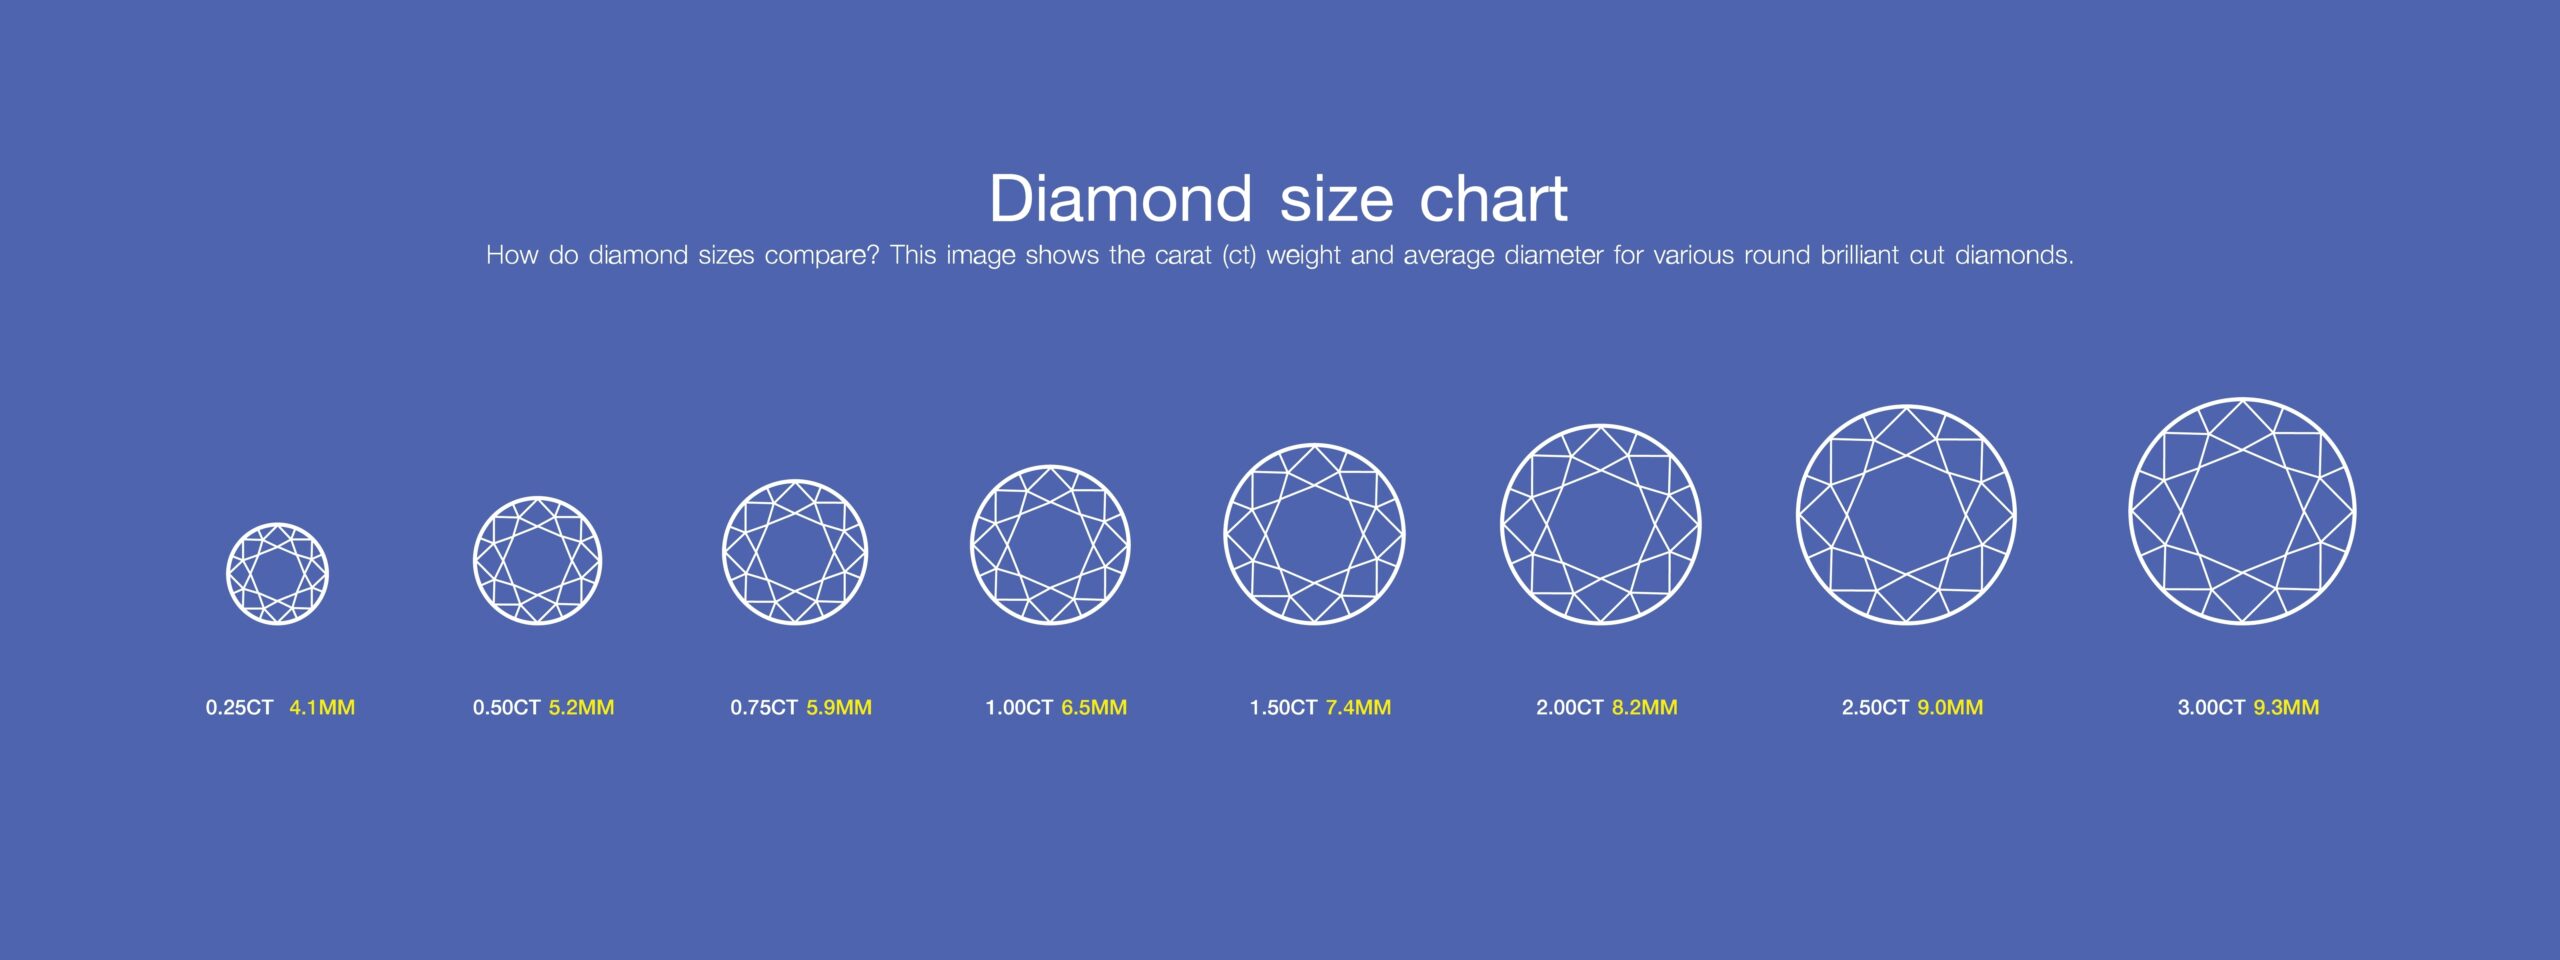 Diamond carat weight chart